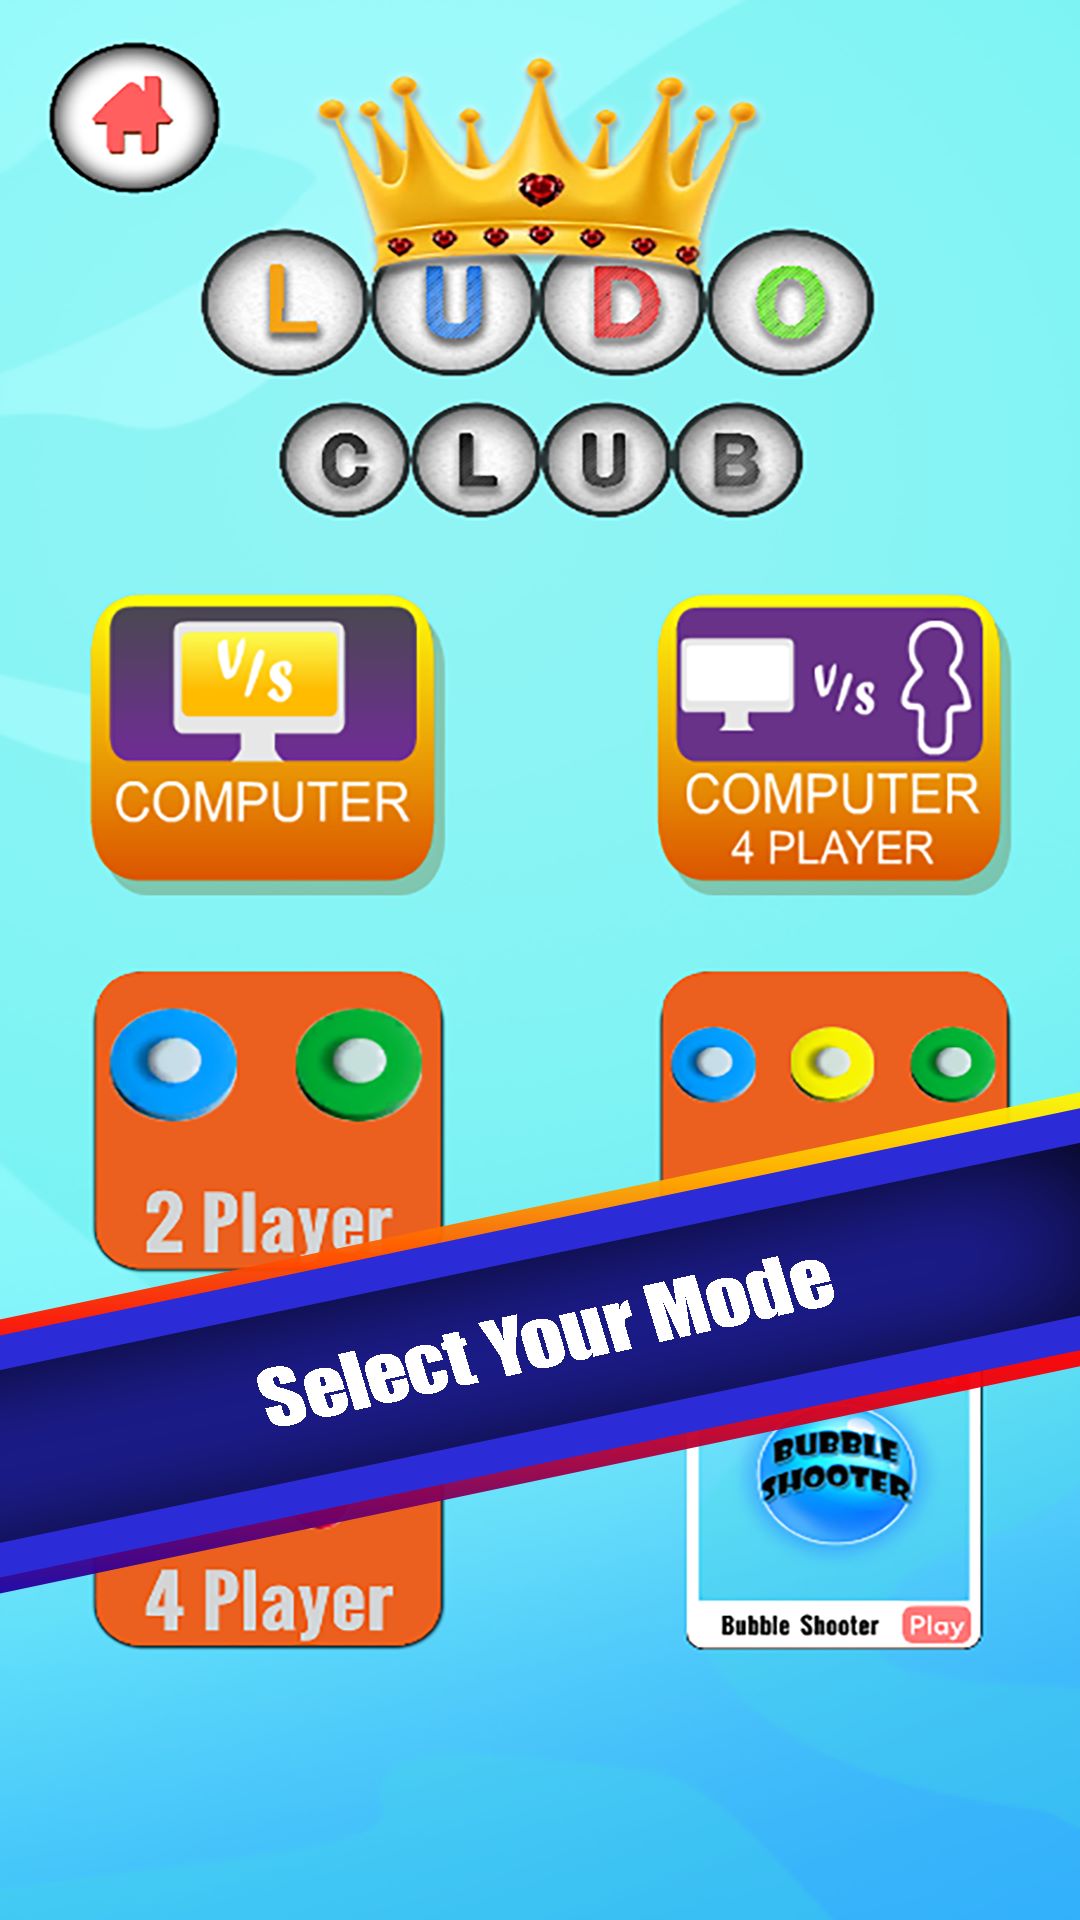 Ludo Club Game App